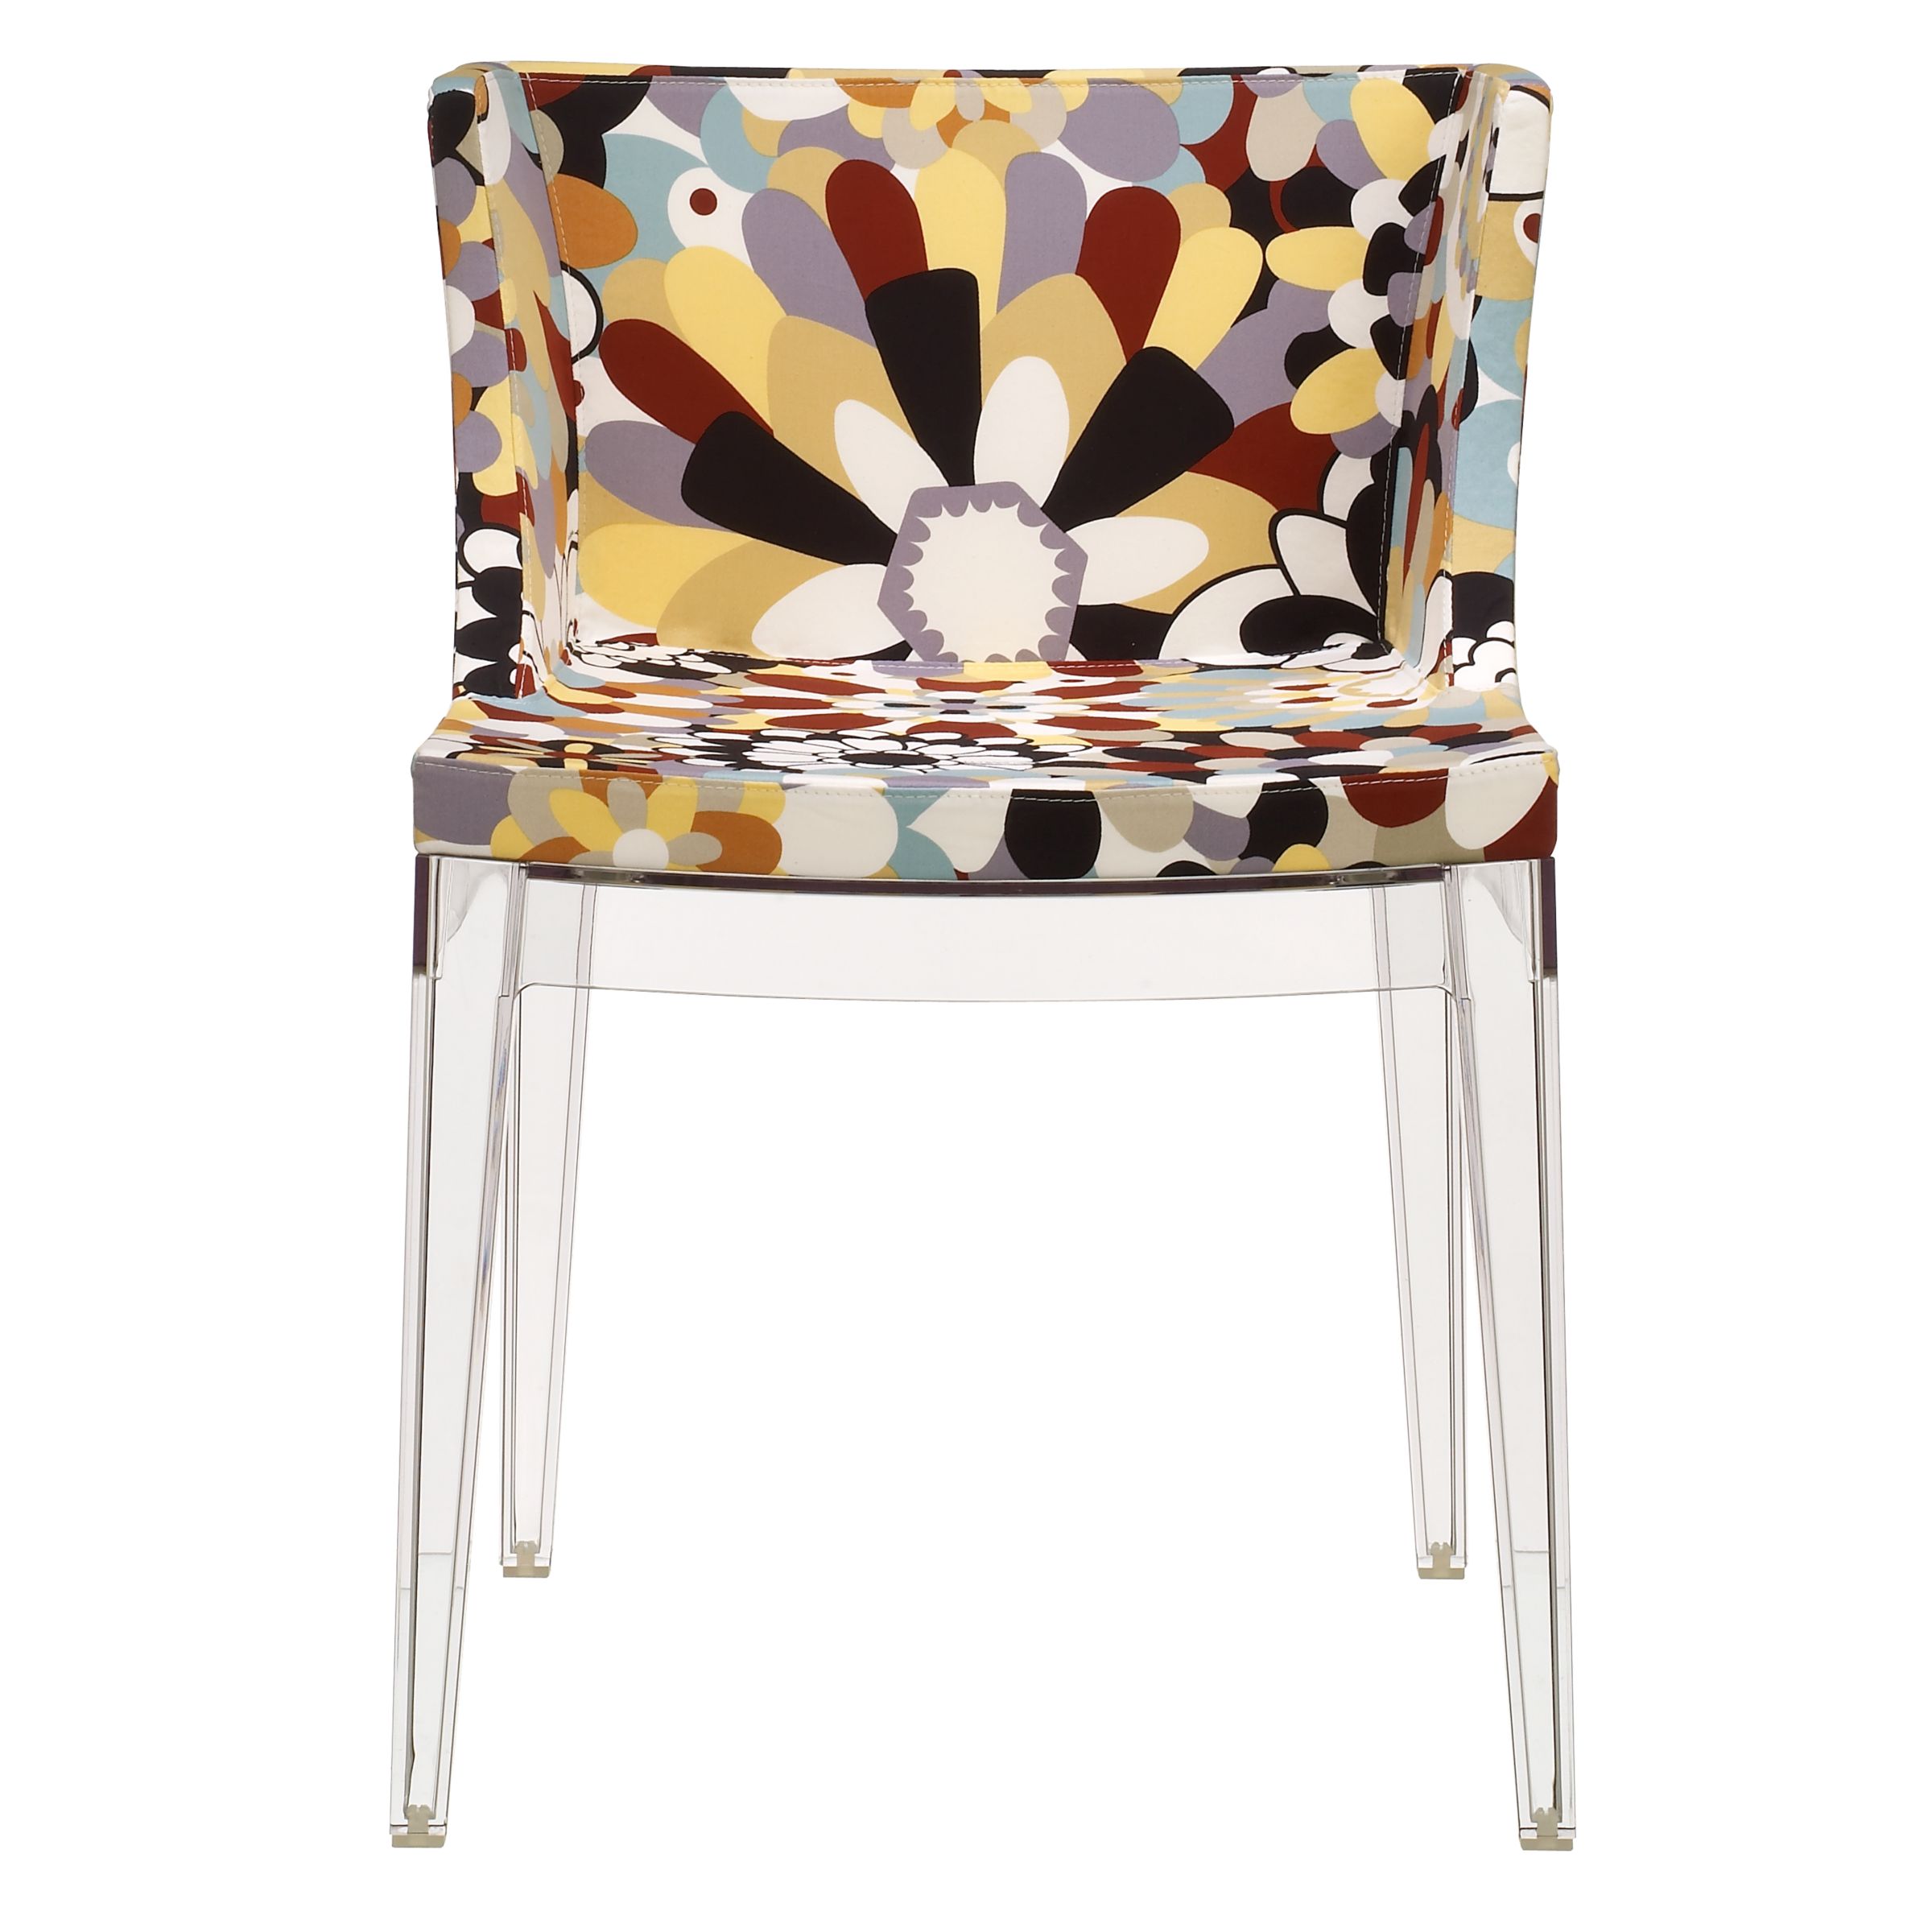 Philippe Starck for Kartell Mademoiselle Missoni Chair at John Lewis